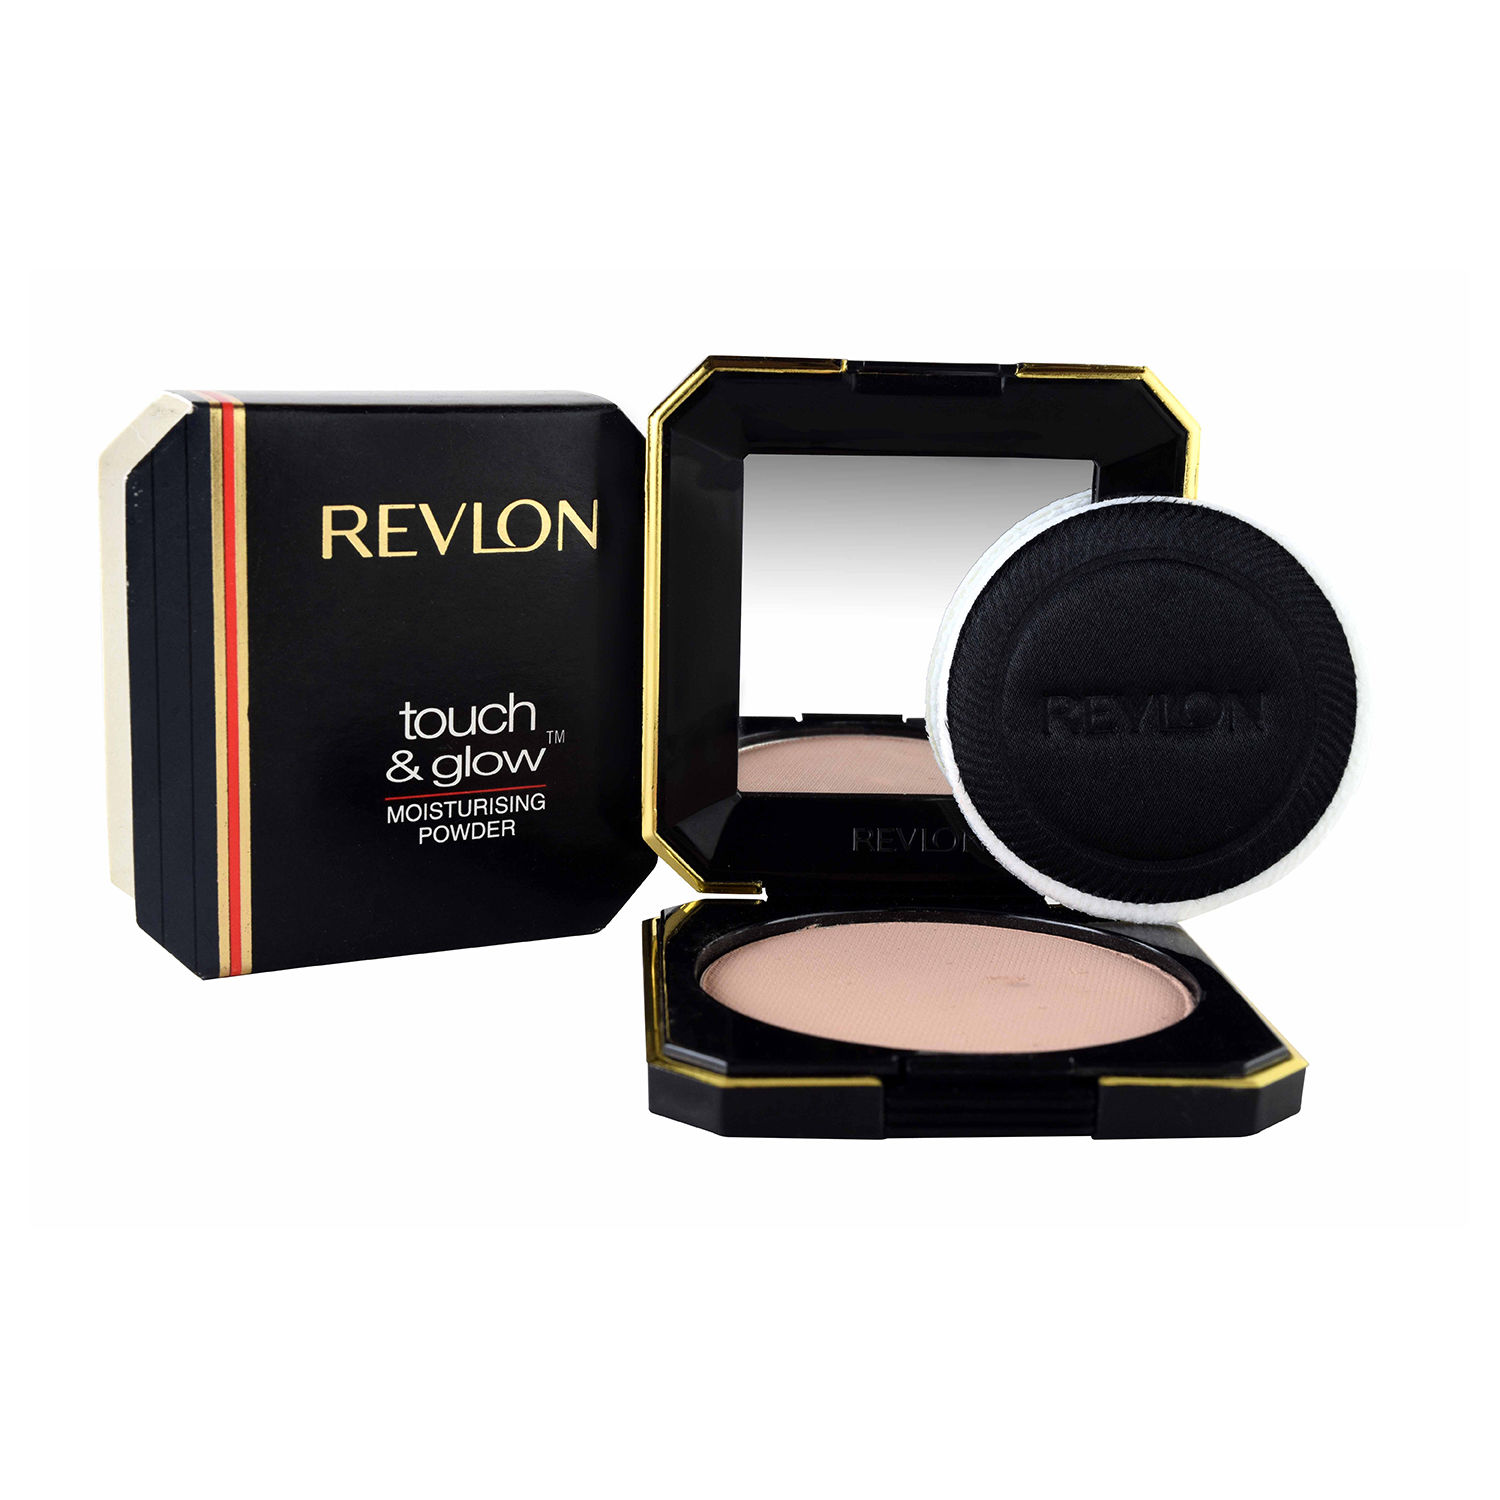 Buy Revlon Touch Glow Moisturising Powder Ivory Matte 12 g - Purplle